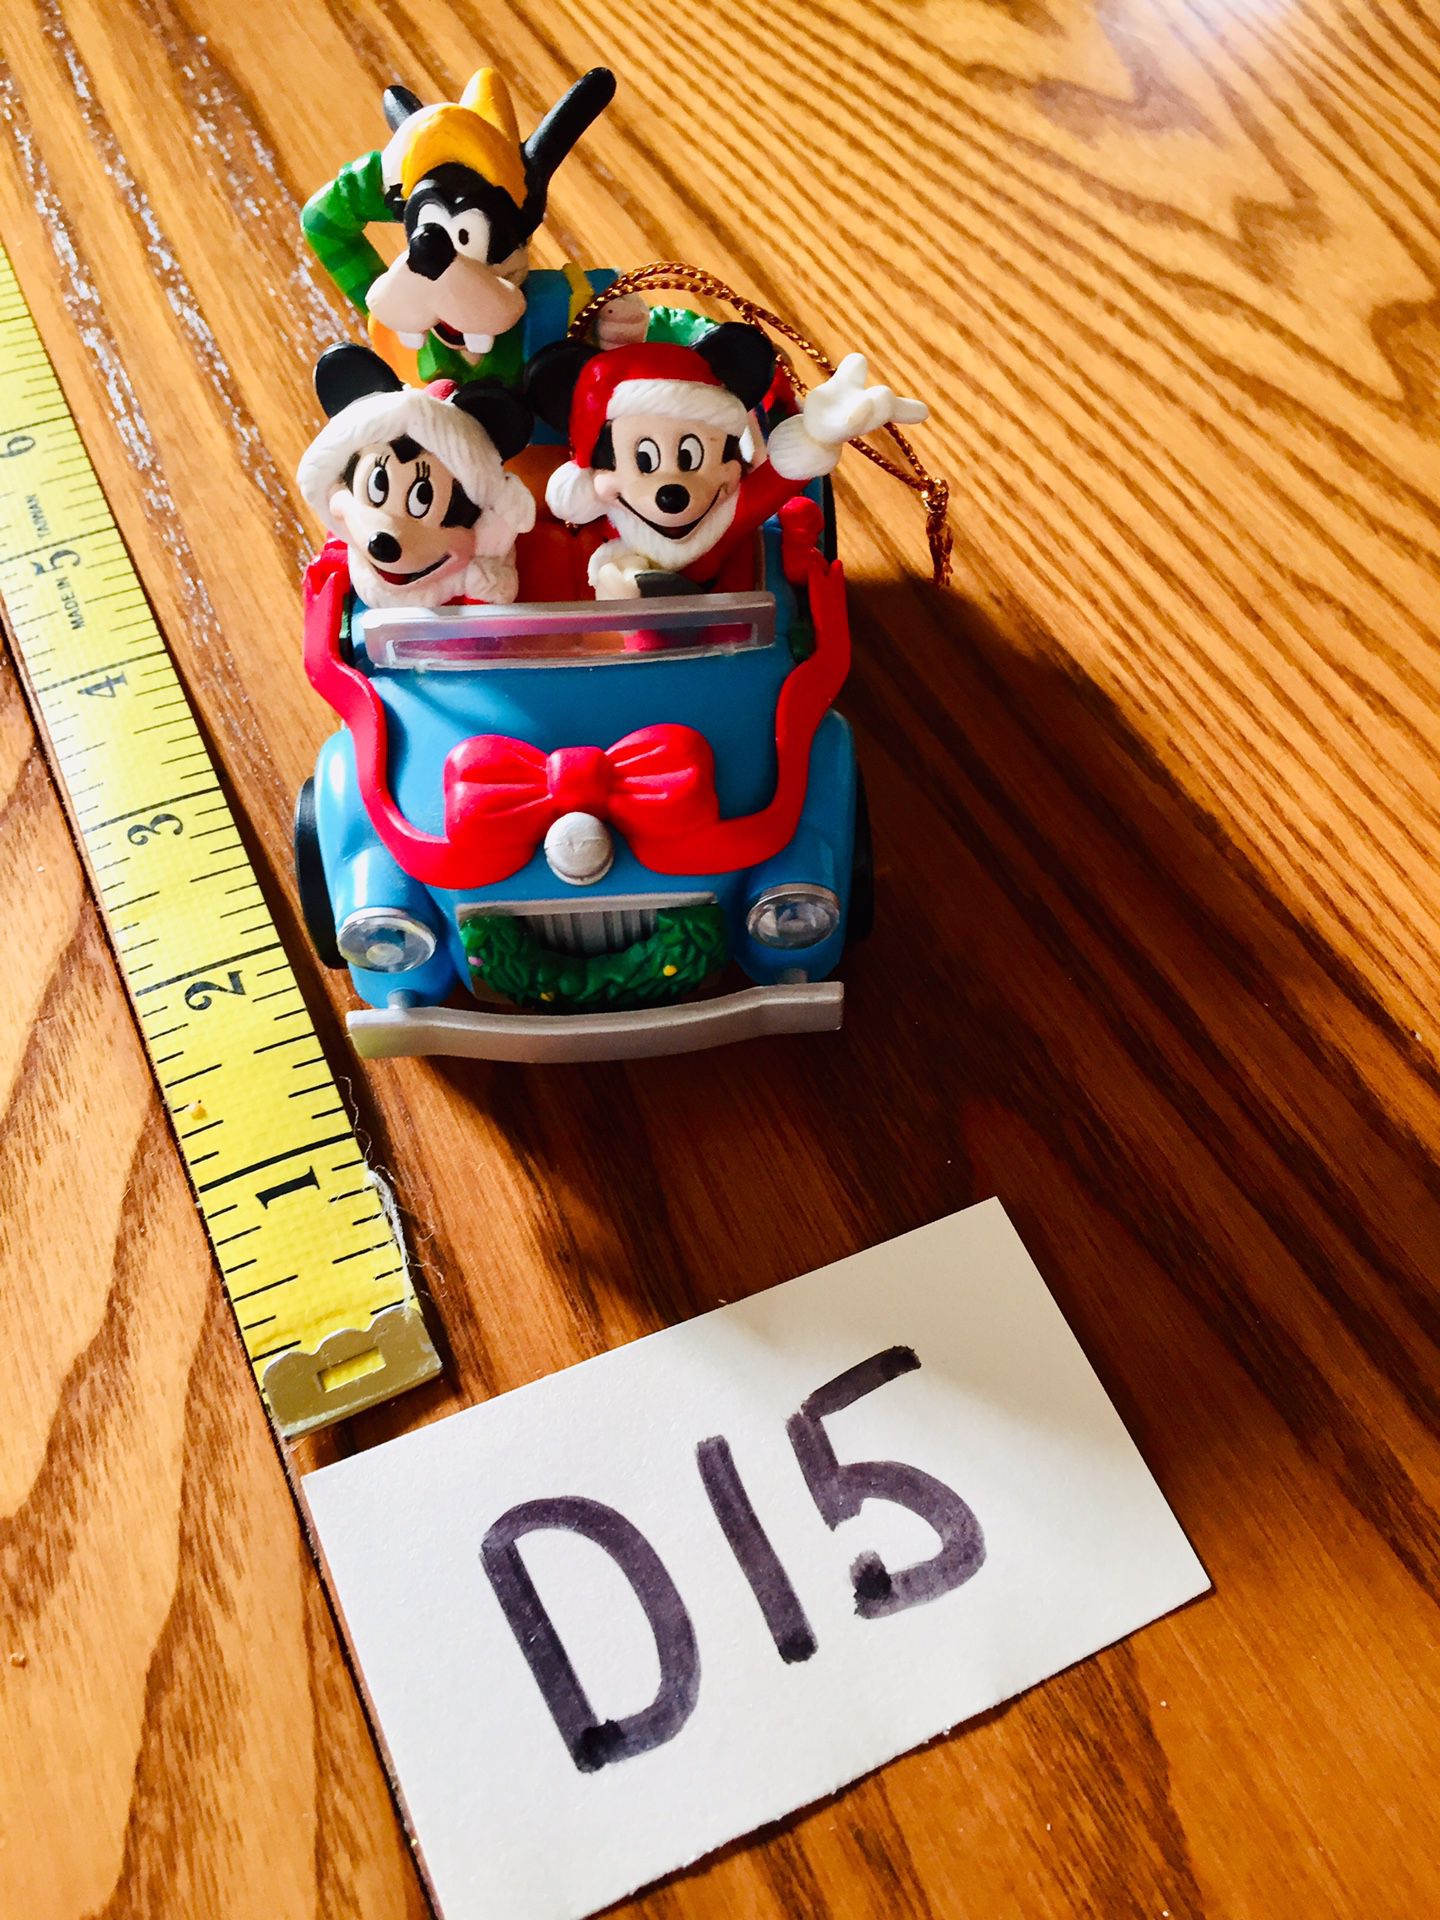 Christmas ornament car lights up! Disney’s Mickey Minnie and goofy